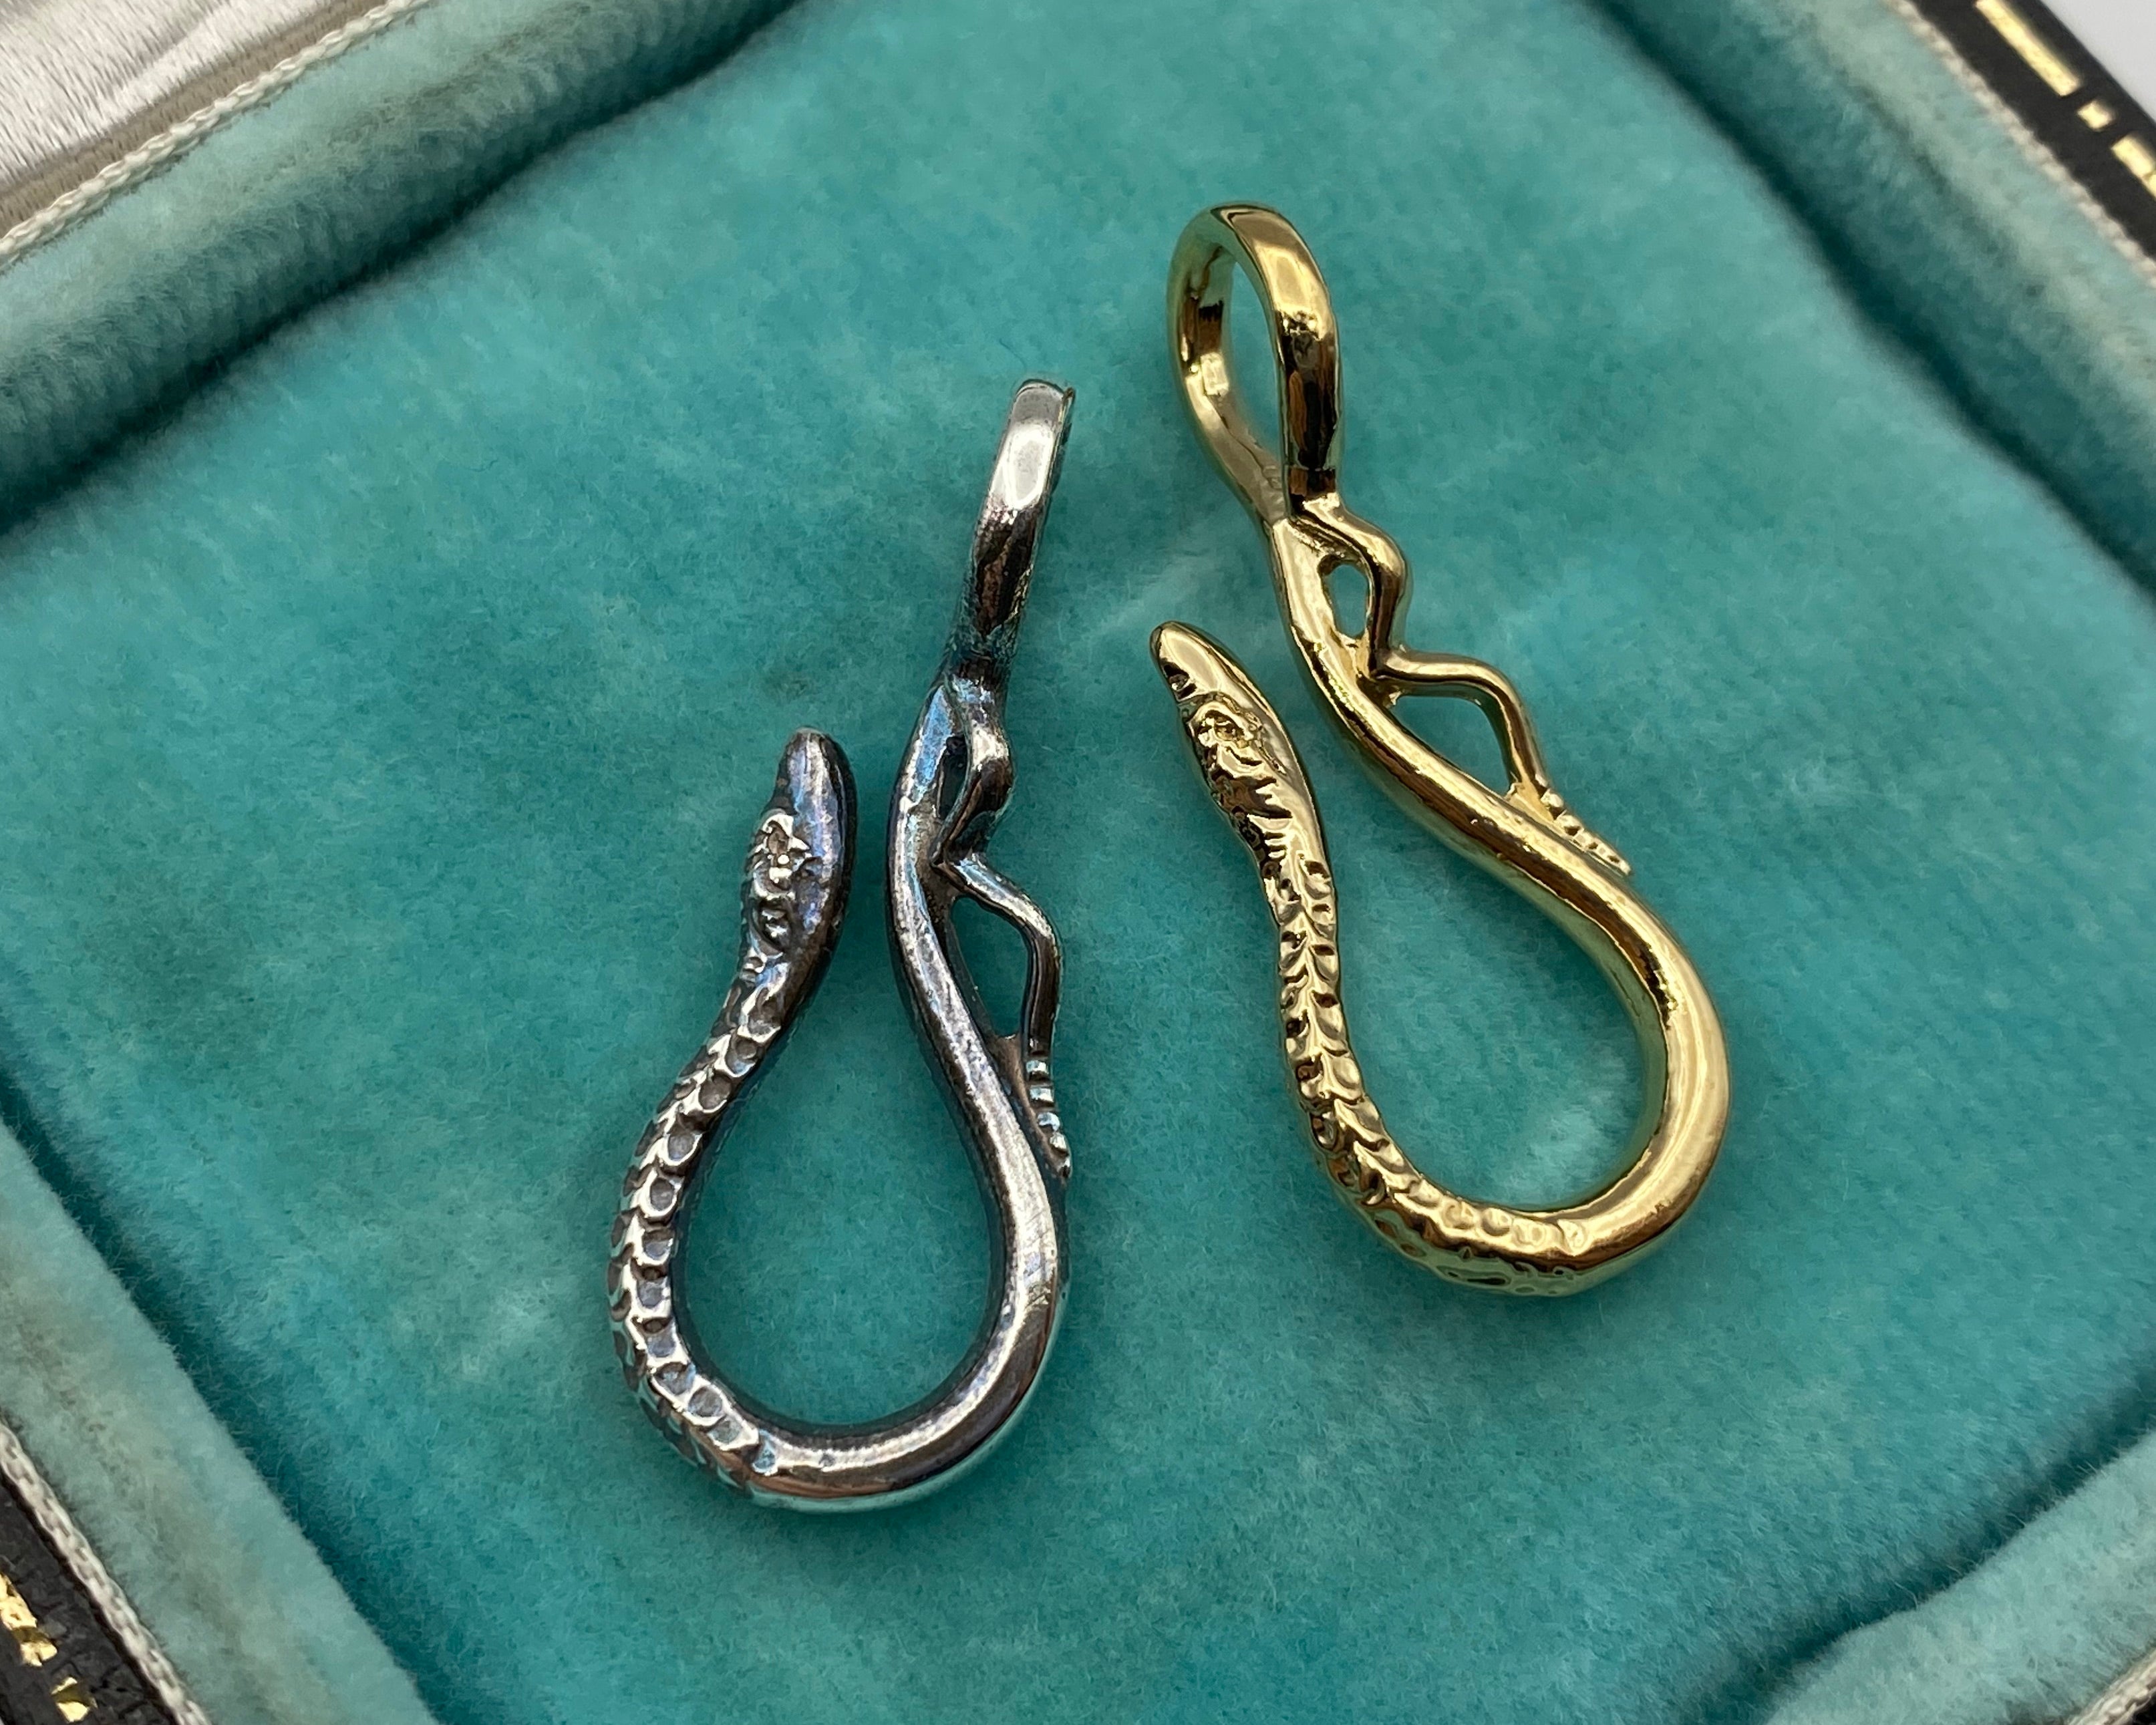 jewelry hook - silver or gold serpent hook - snake hook - charm holder